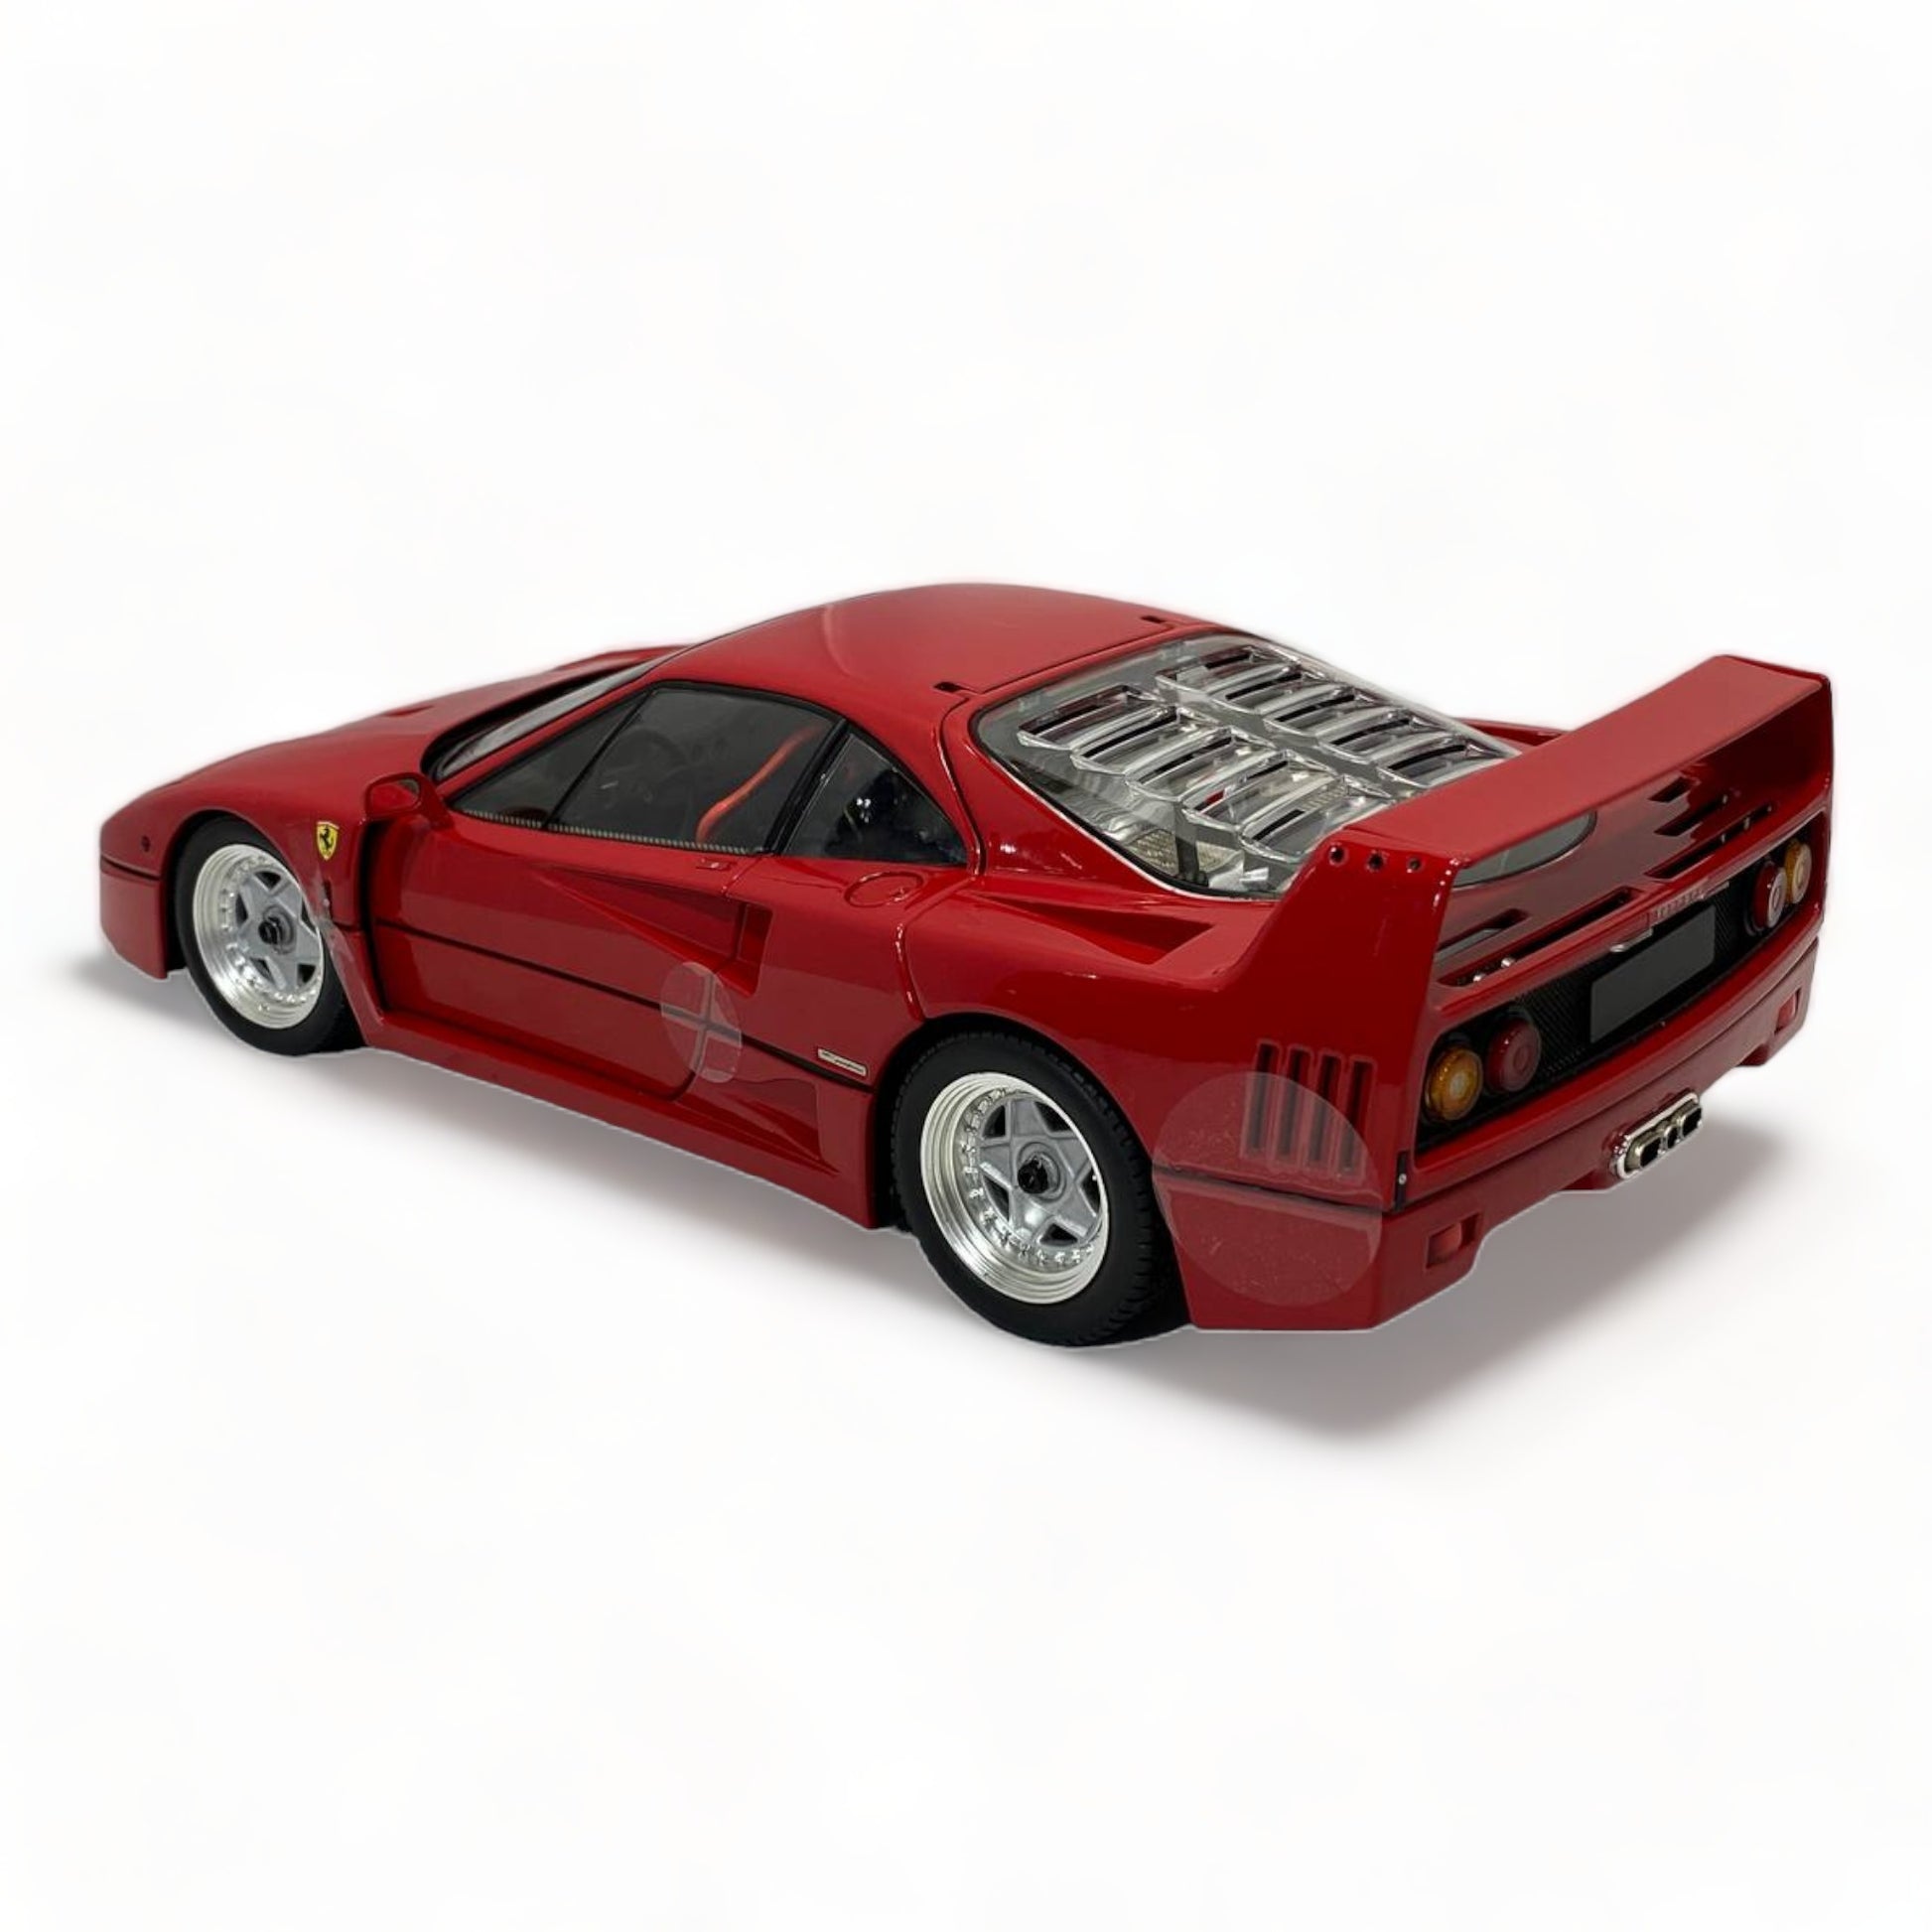 1/18 Diecast Ferrari F40 Red by Kyosho Scale Model Car|Sold in Dturman.com Dubai UAE.